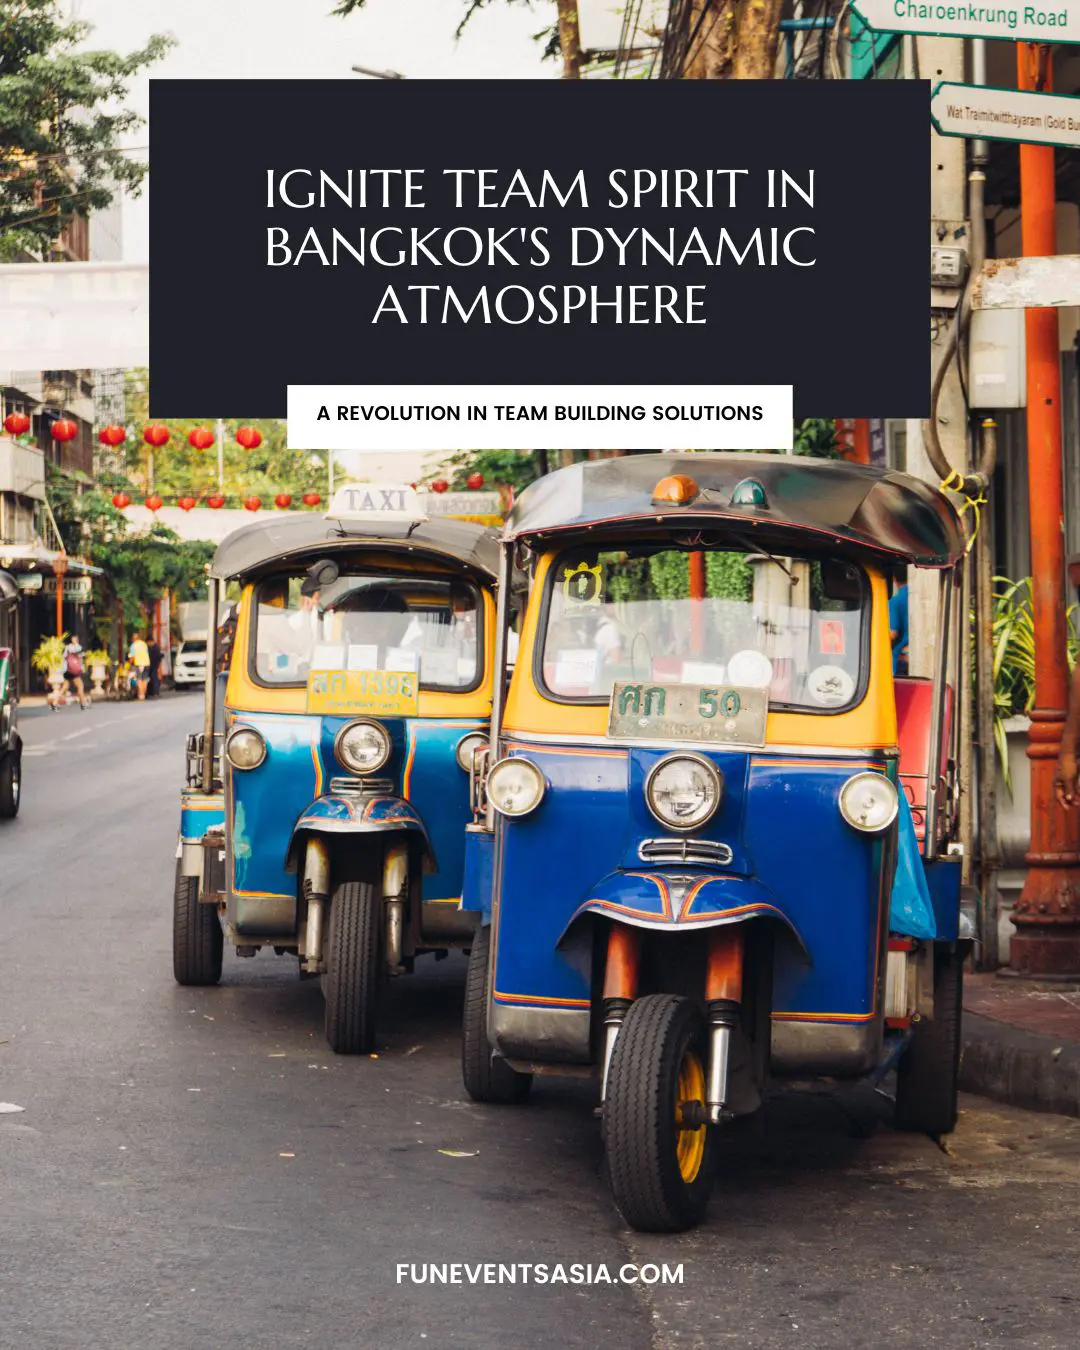 Ignite Team Spirit in Bangkok's Dynamic Atmosphere